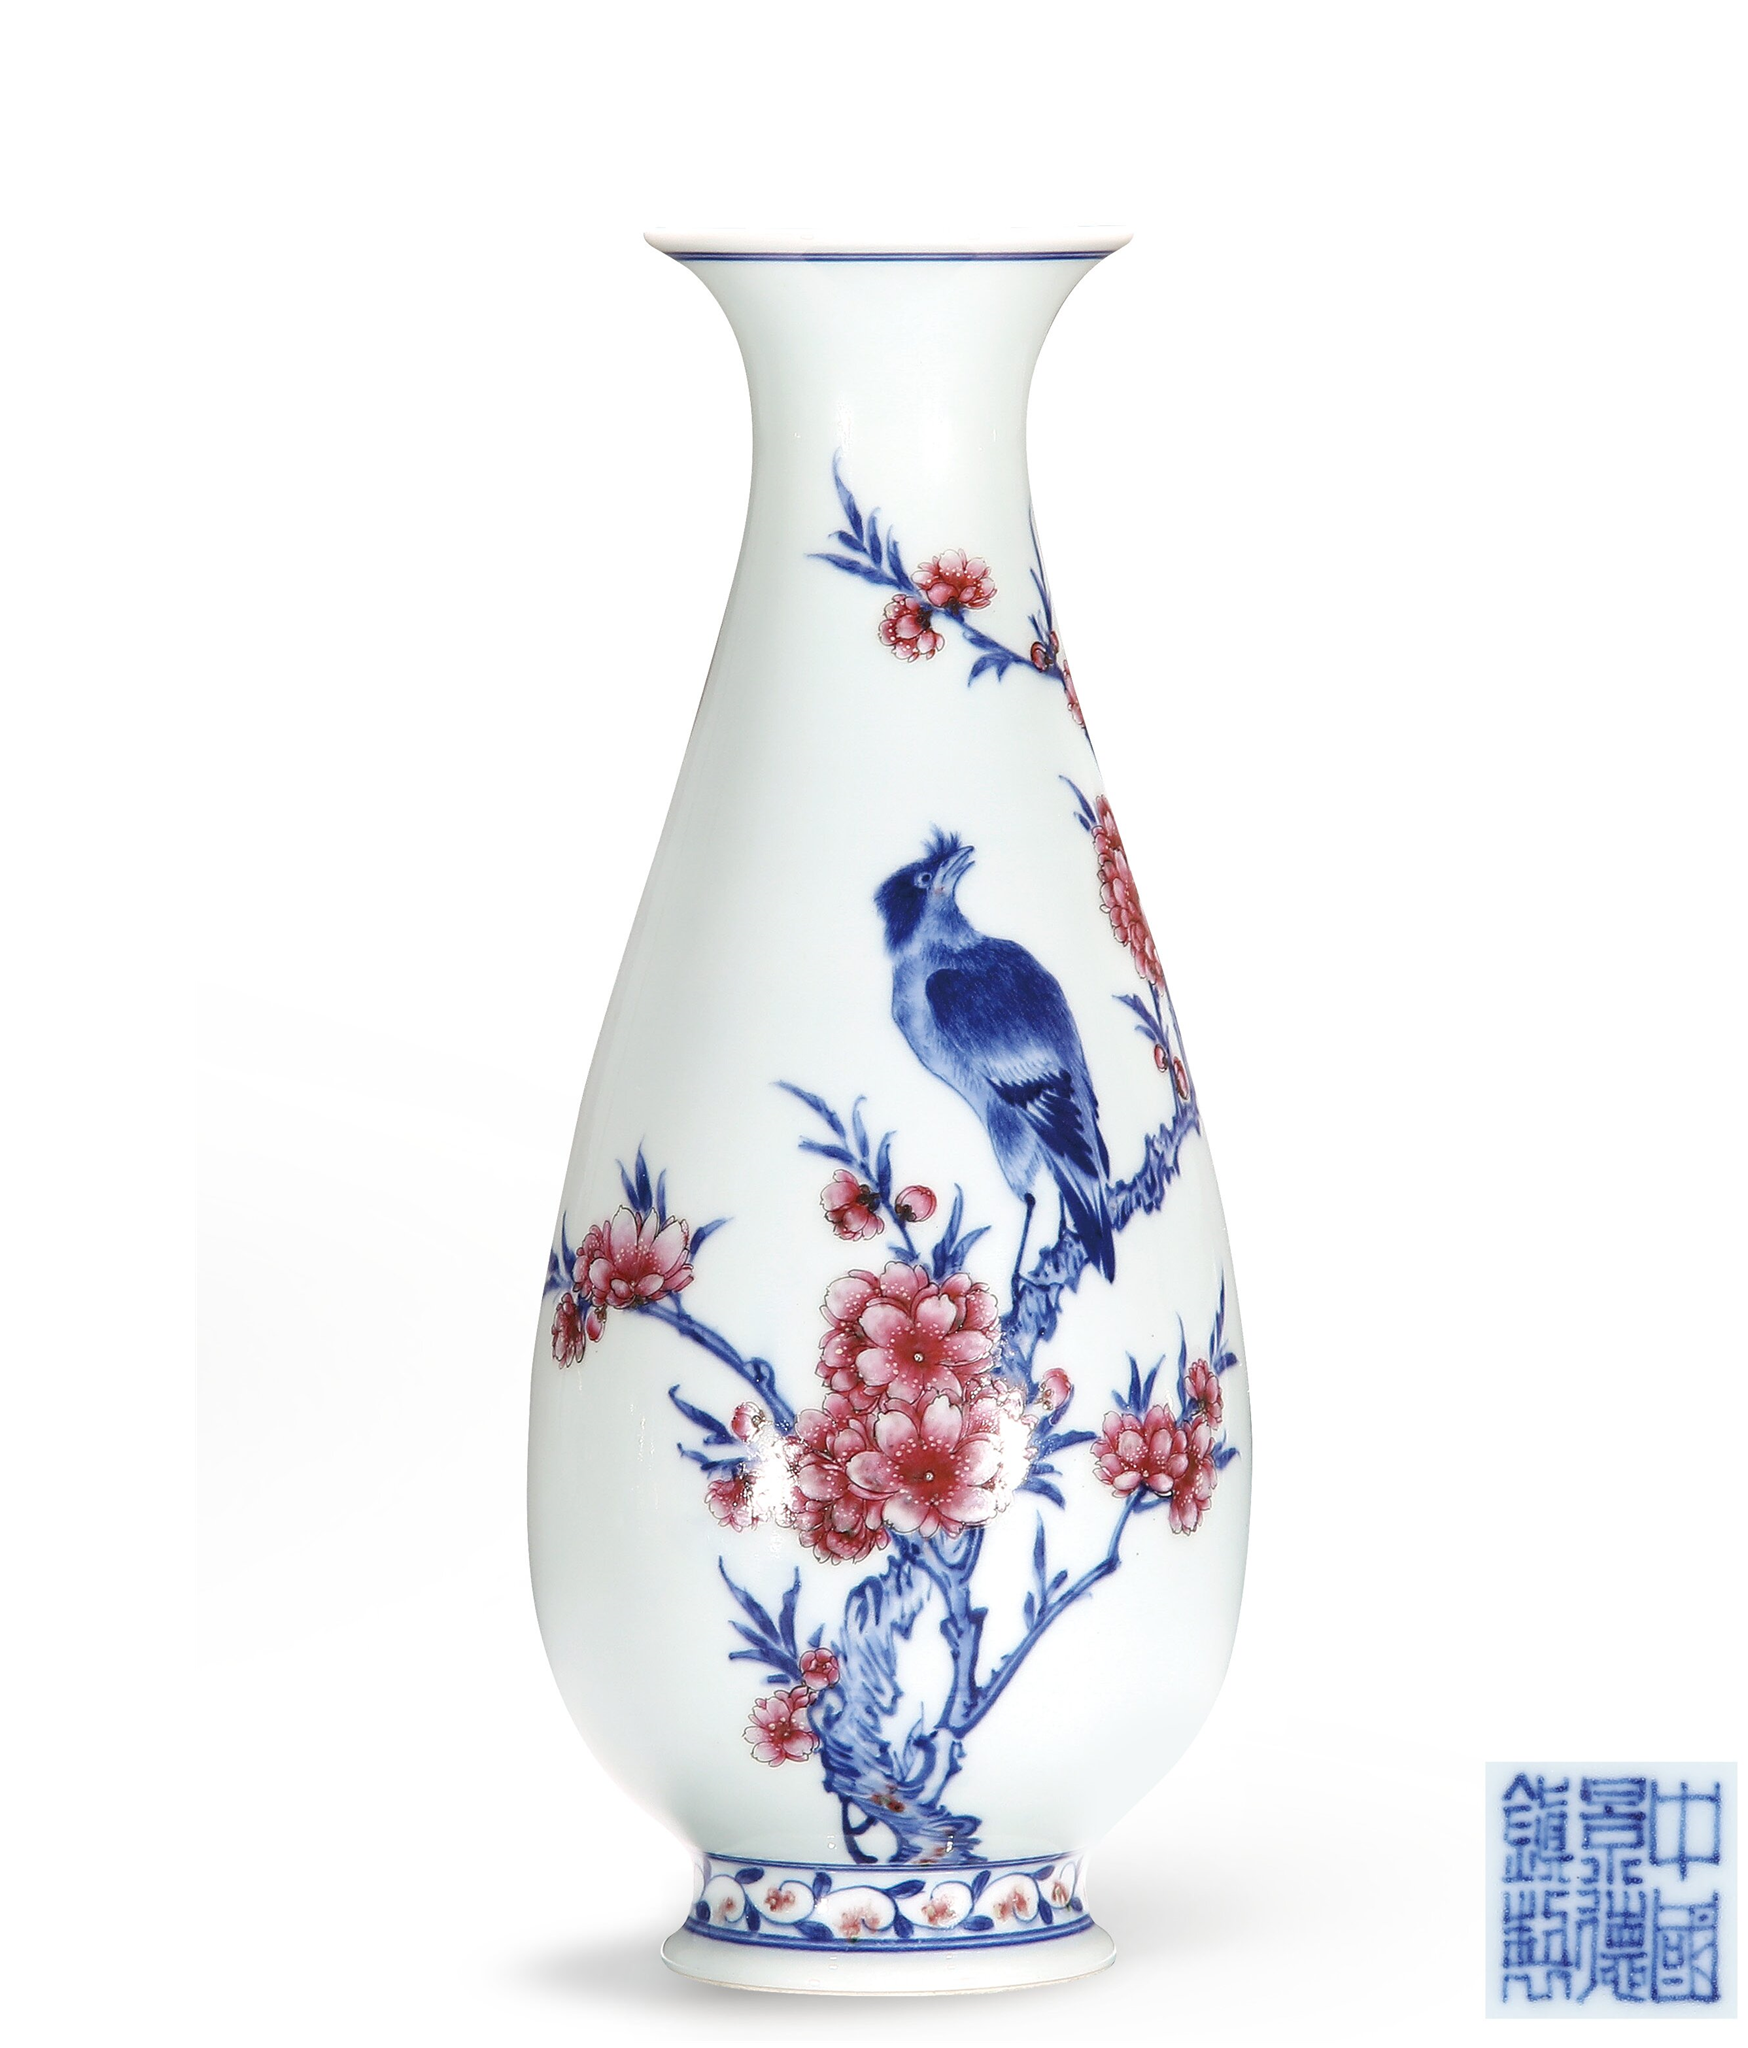 vq8|9783 中国骨董 人間国宝 陶芸 磁器『清康熙五彩花鳥紋梅瓶です